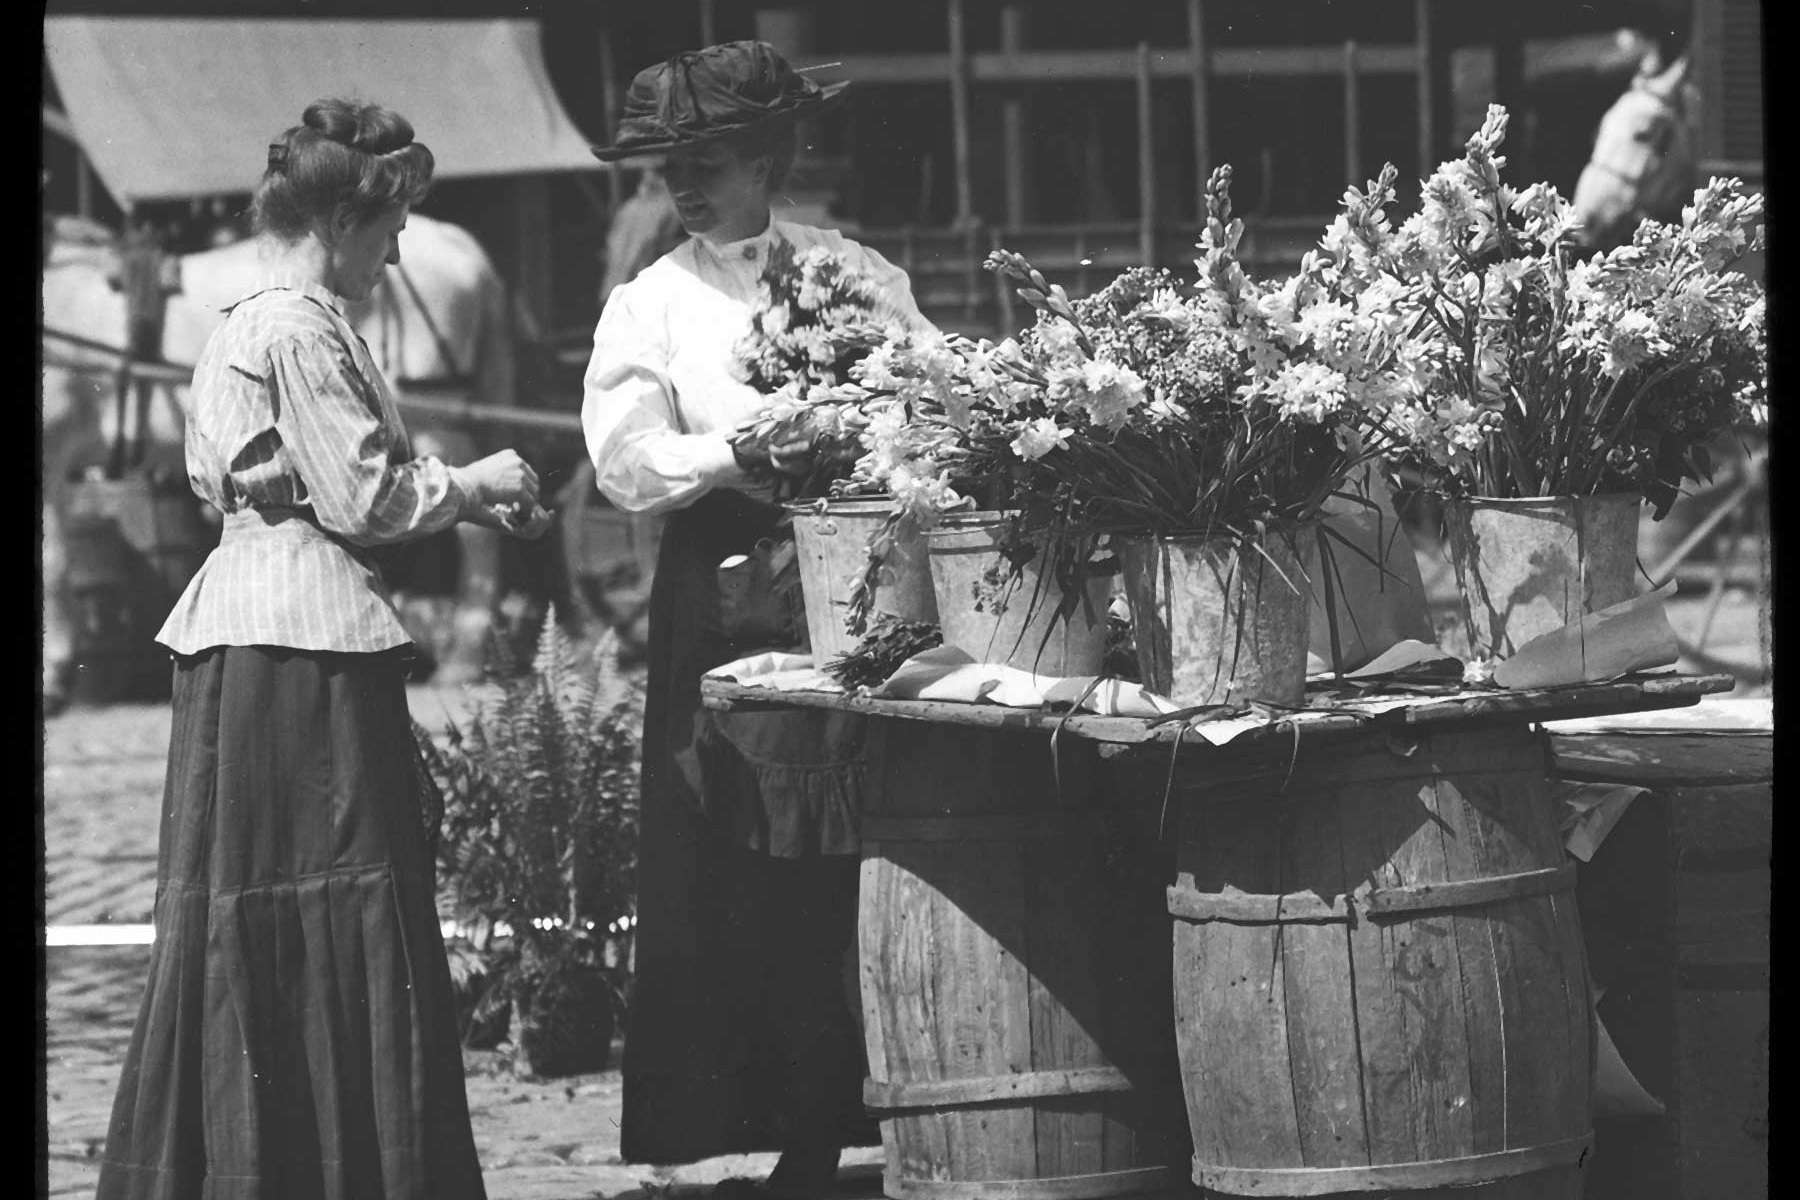 Flower market, Cincinnati, Ohio. From the Collection of Cincinnati & Hamilton County Public Library